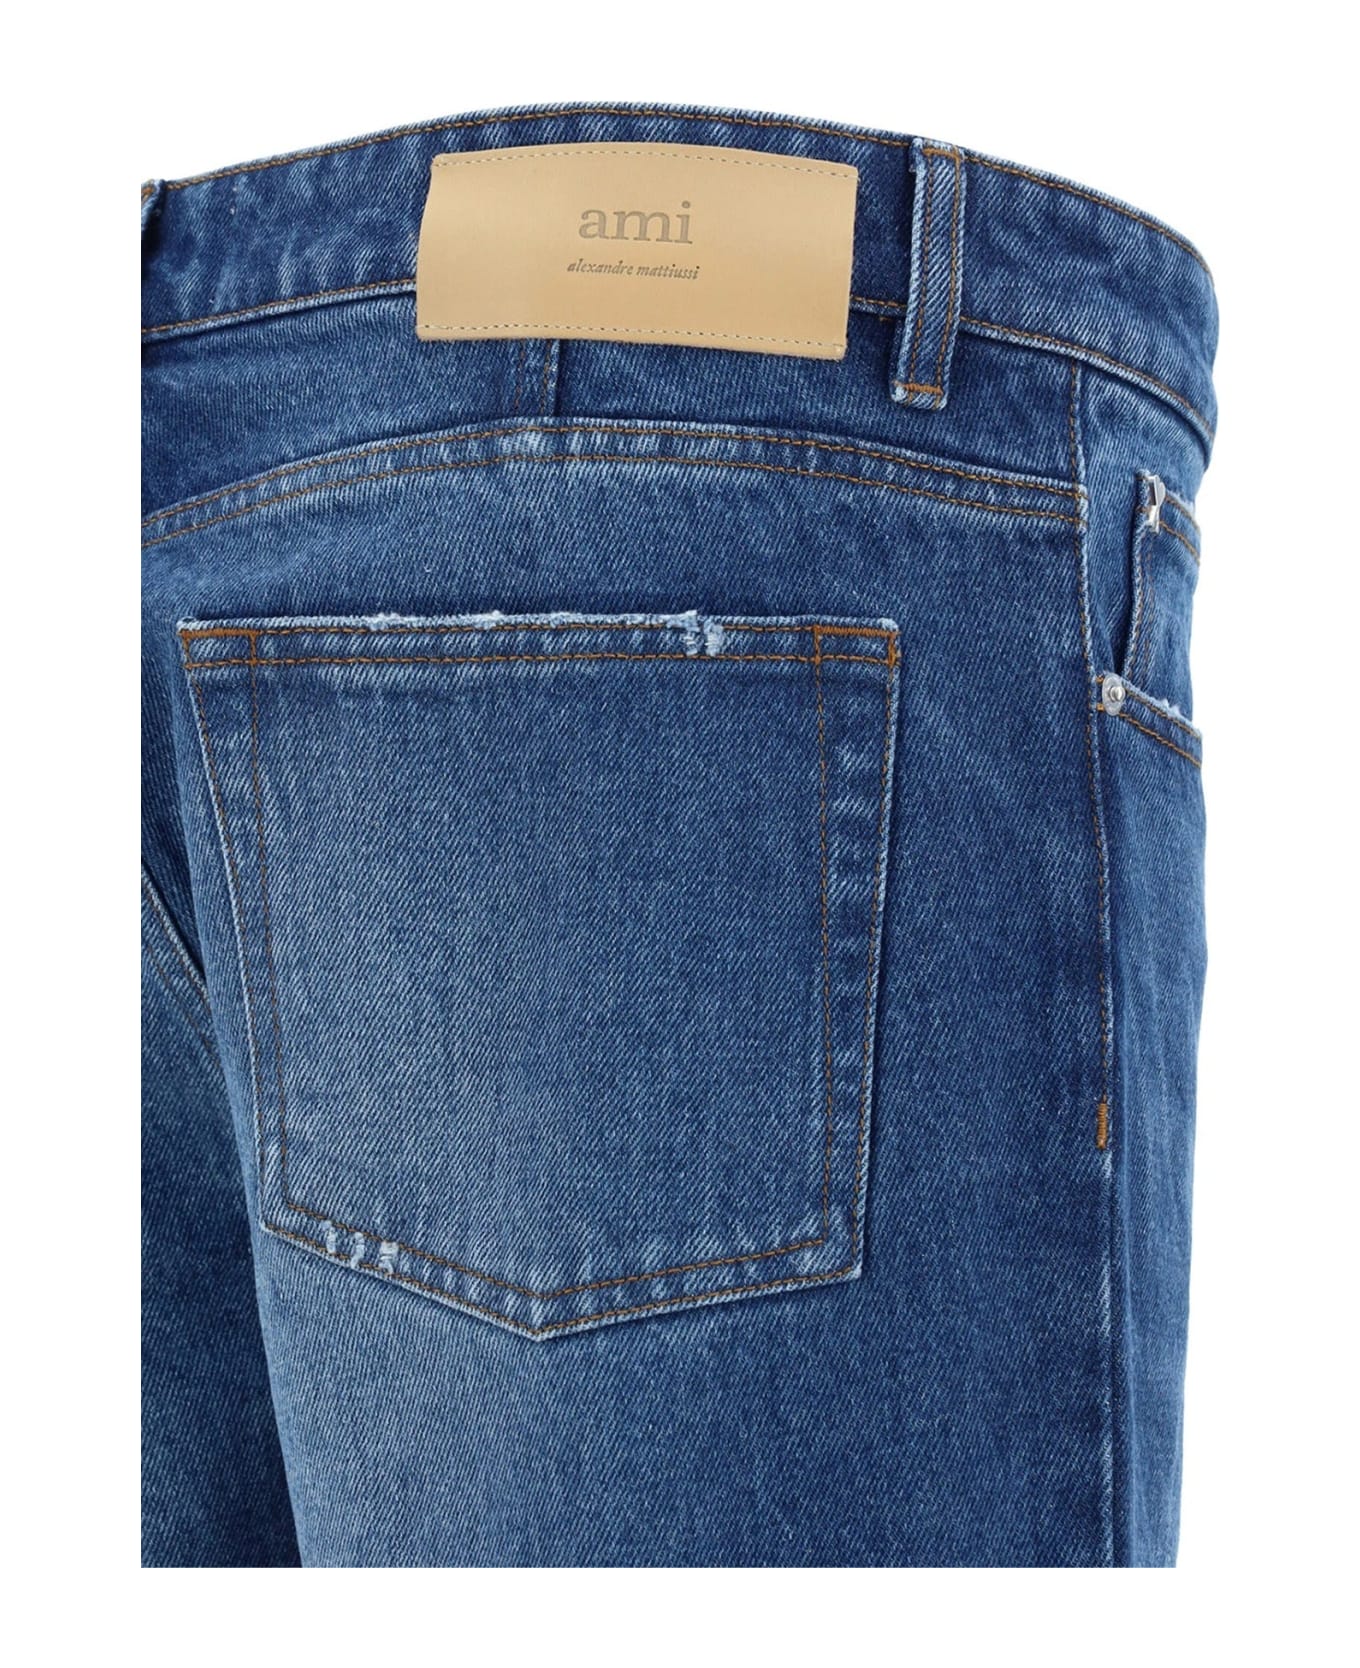 Ami Alexandre Mattiussi Classic Fit Jeans - Blue デニム